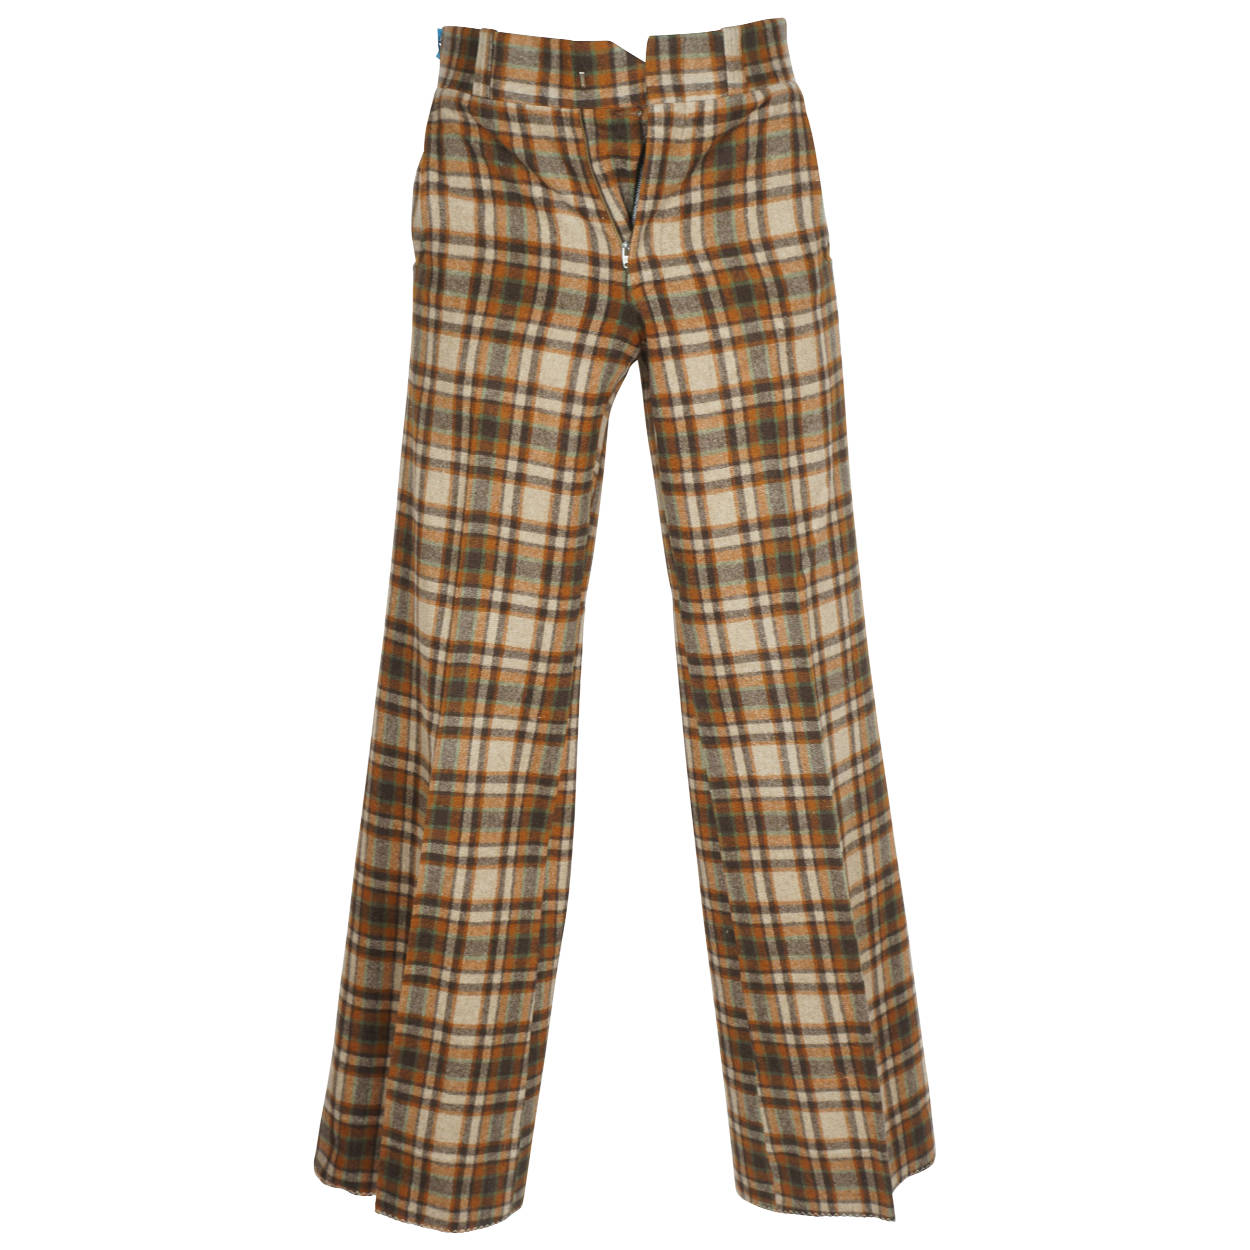 Sazz Vintage Clothing: (35x28) Mens Vintage 70s Disco Pants! Tiny Plaid in  Brown & White!